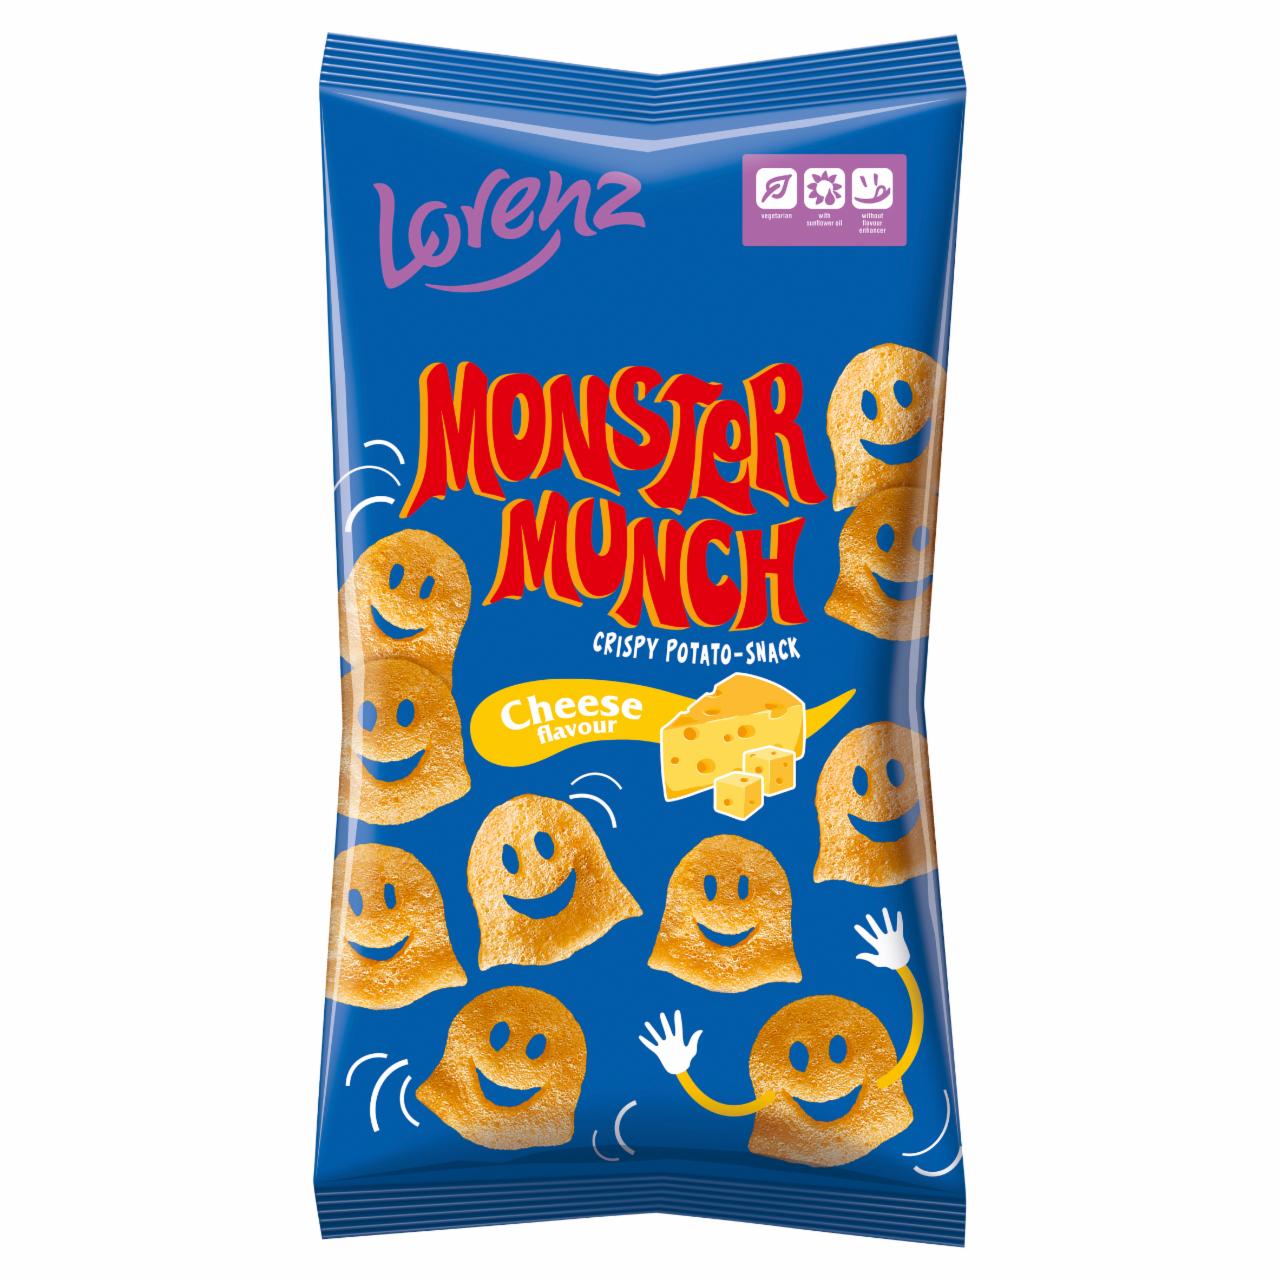 Képek - Lorenz Monster Munch sajt ízű burgonyasnack 75 g